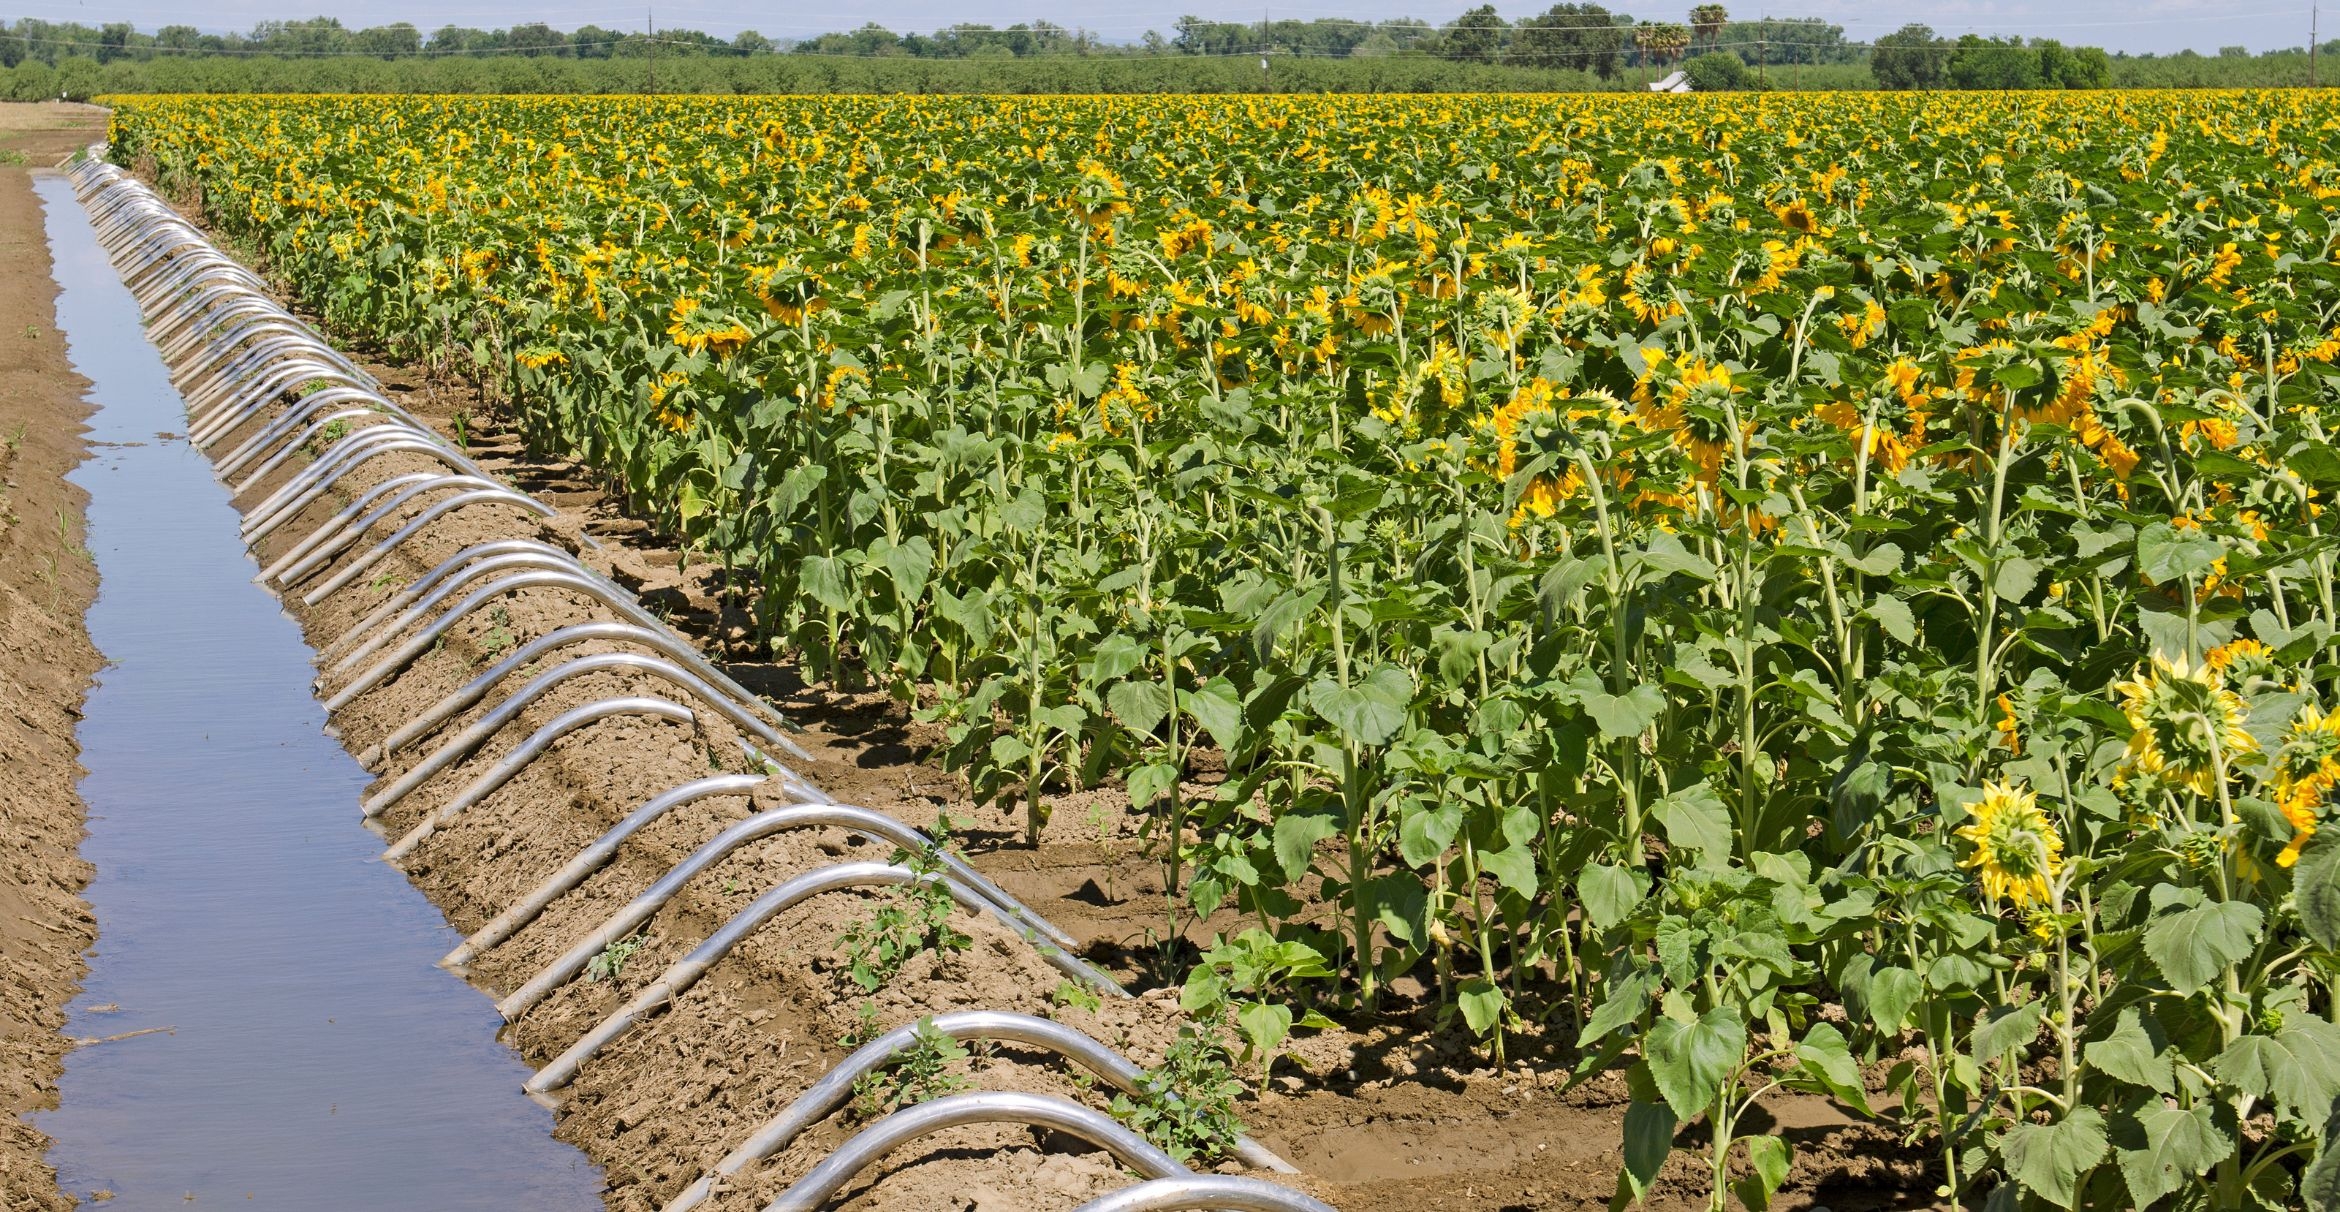 A large field of sunflowers near Sacramento.